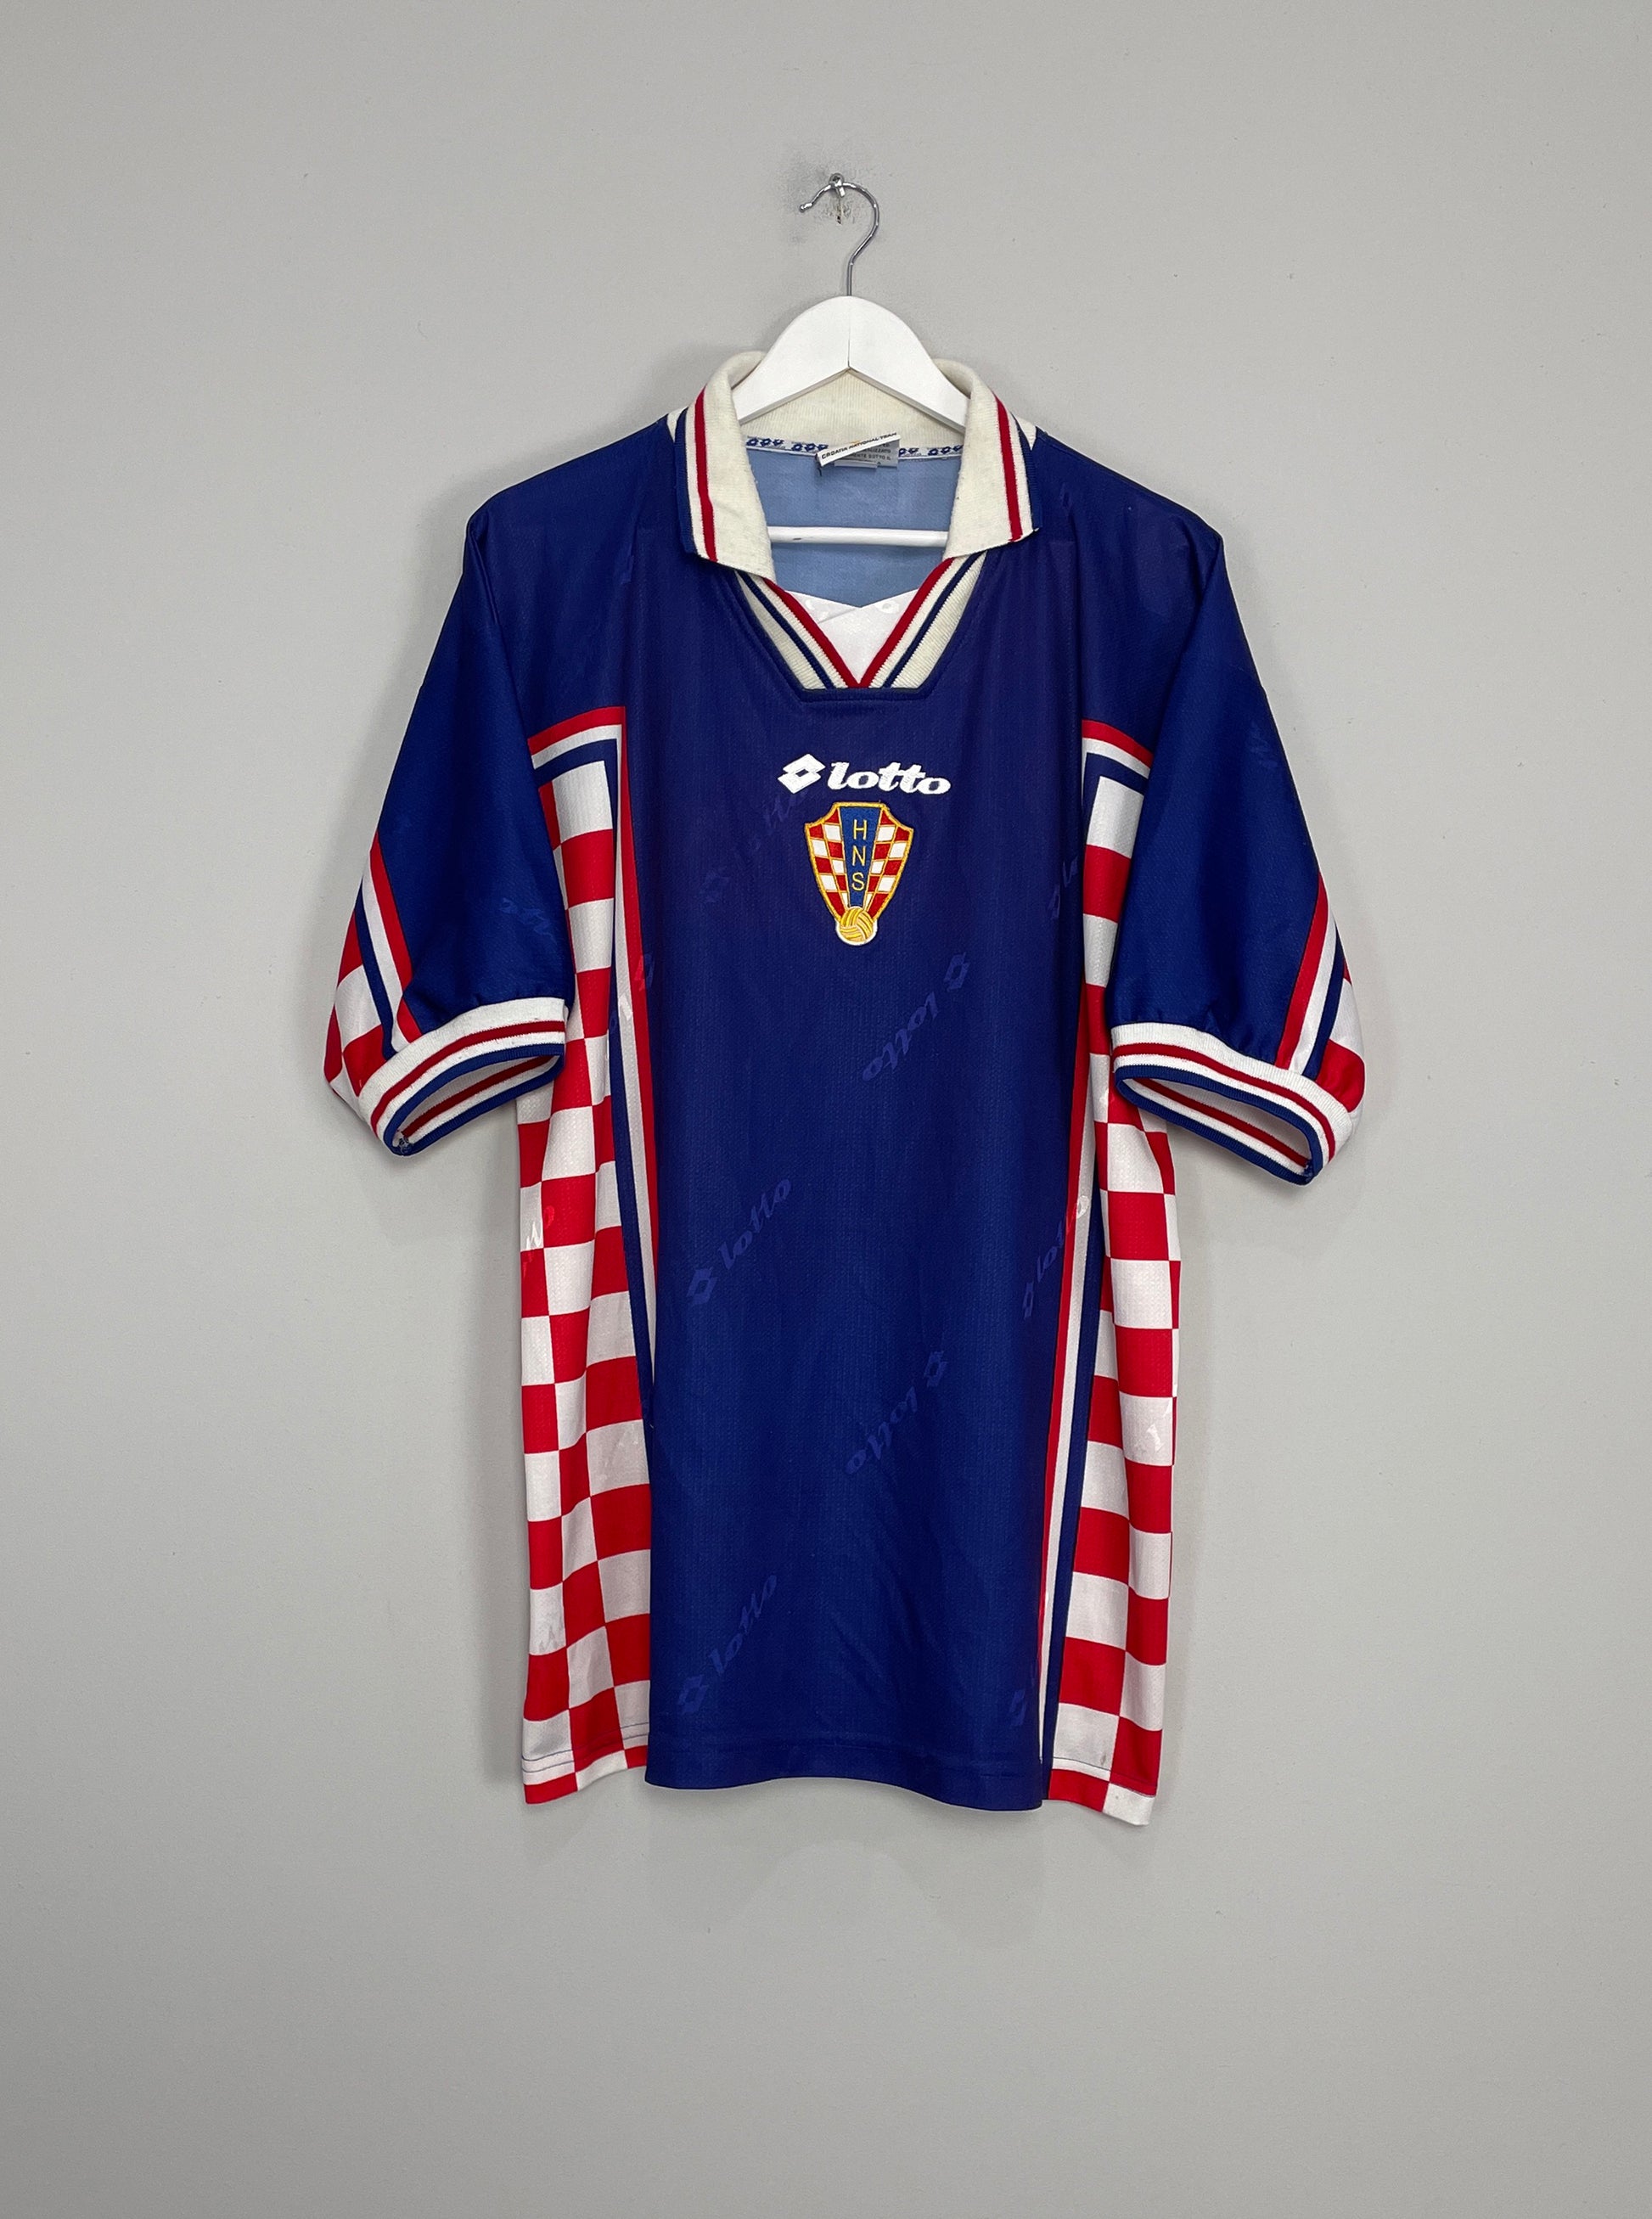 Image of the Croatia shirt from the 1998/01 season